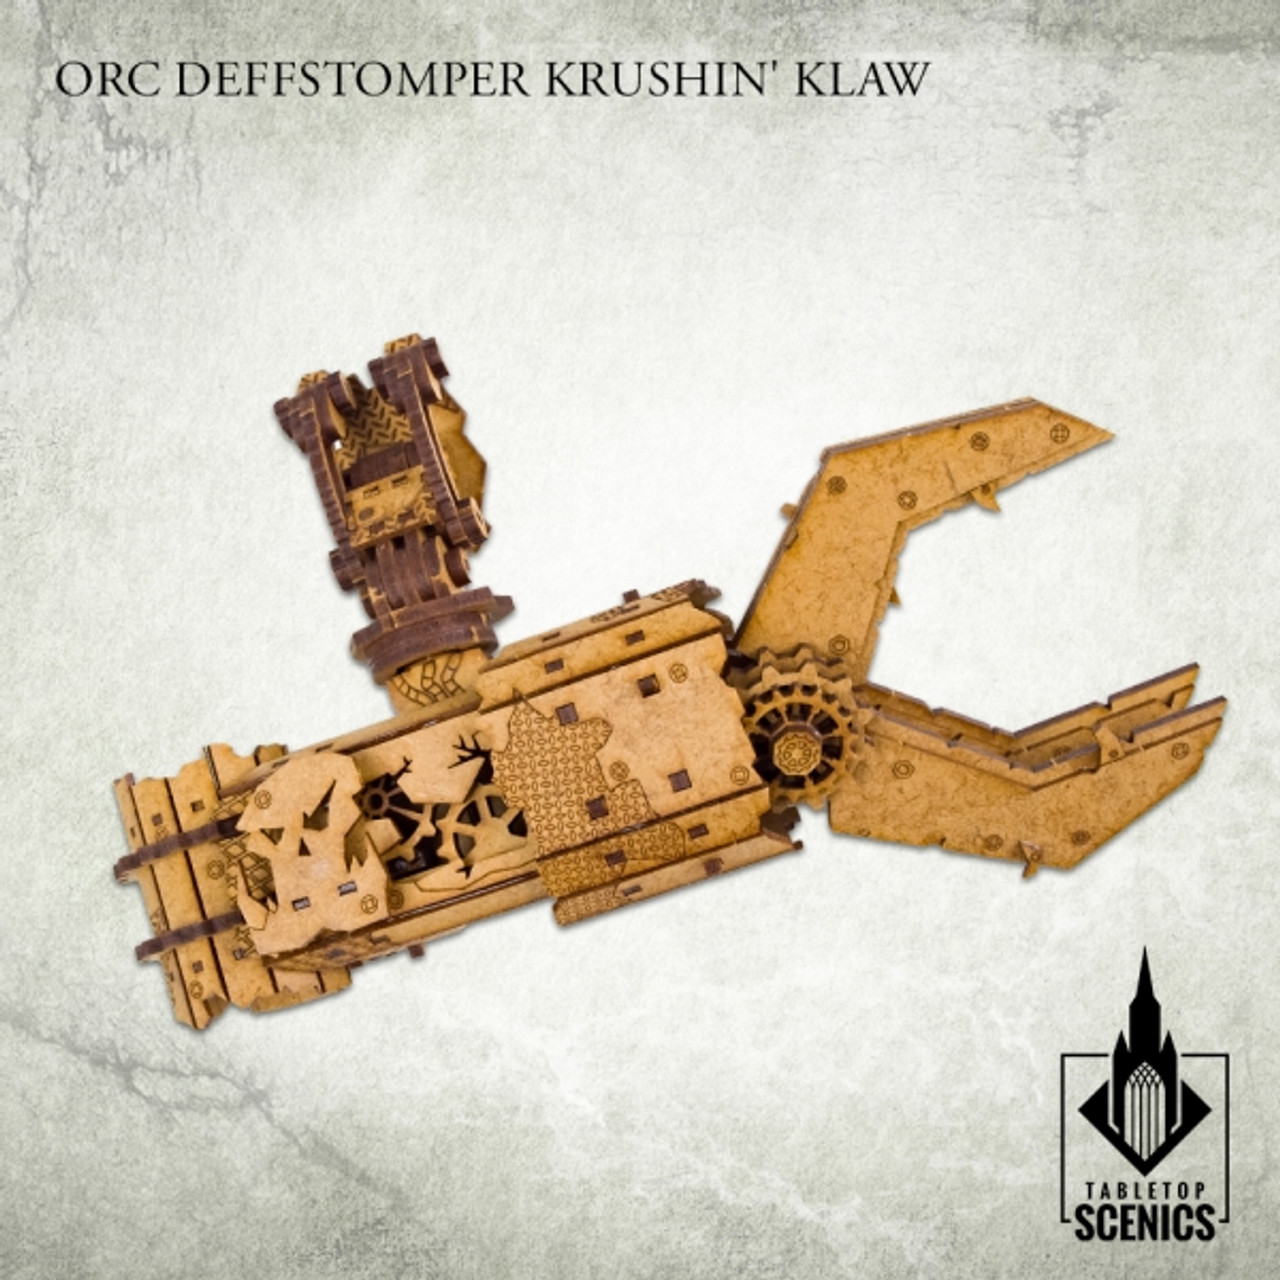 Orc Boomkilla Deffstomper - KRTS145